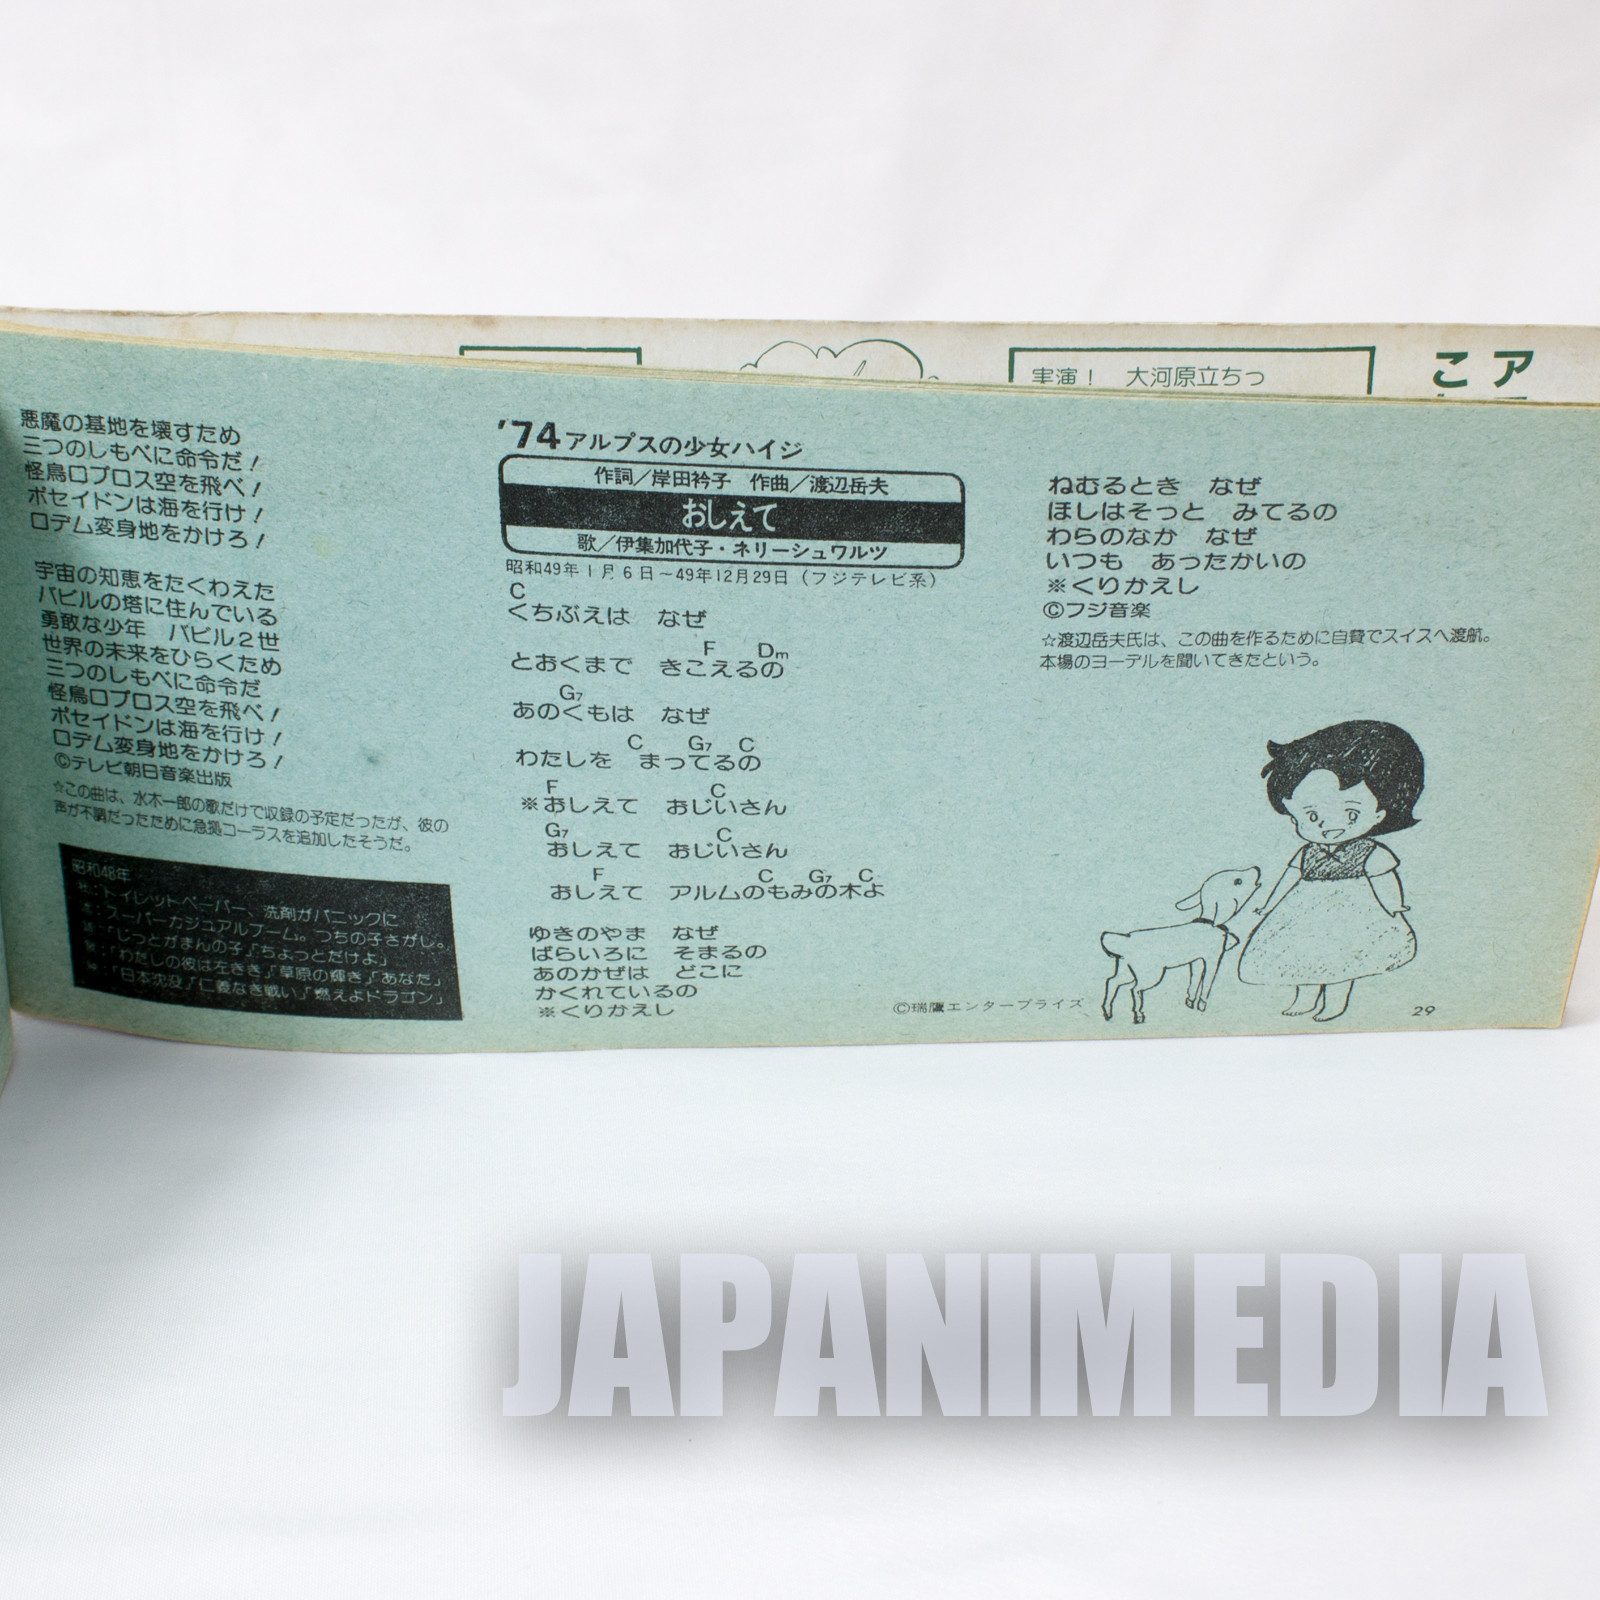 Retro Japanese Anime 100 Songs 1963-1984 Code Book Animedia 1984 Sep